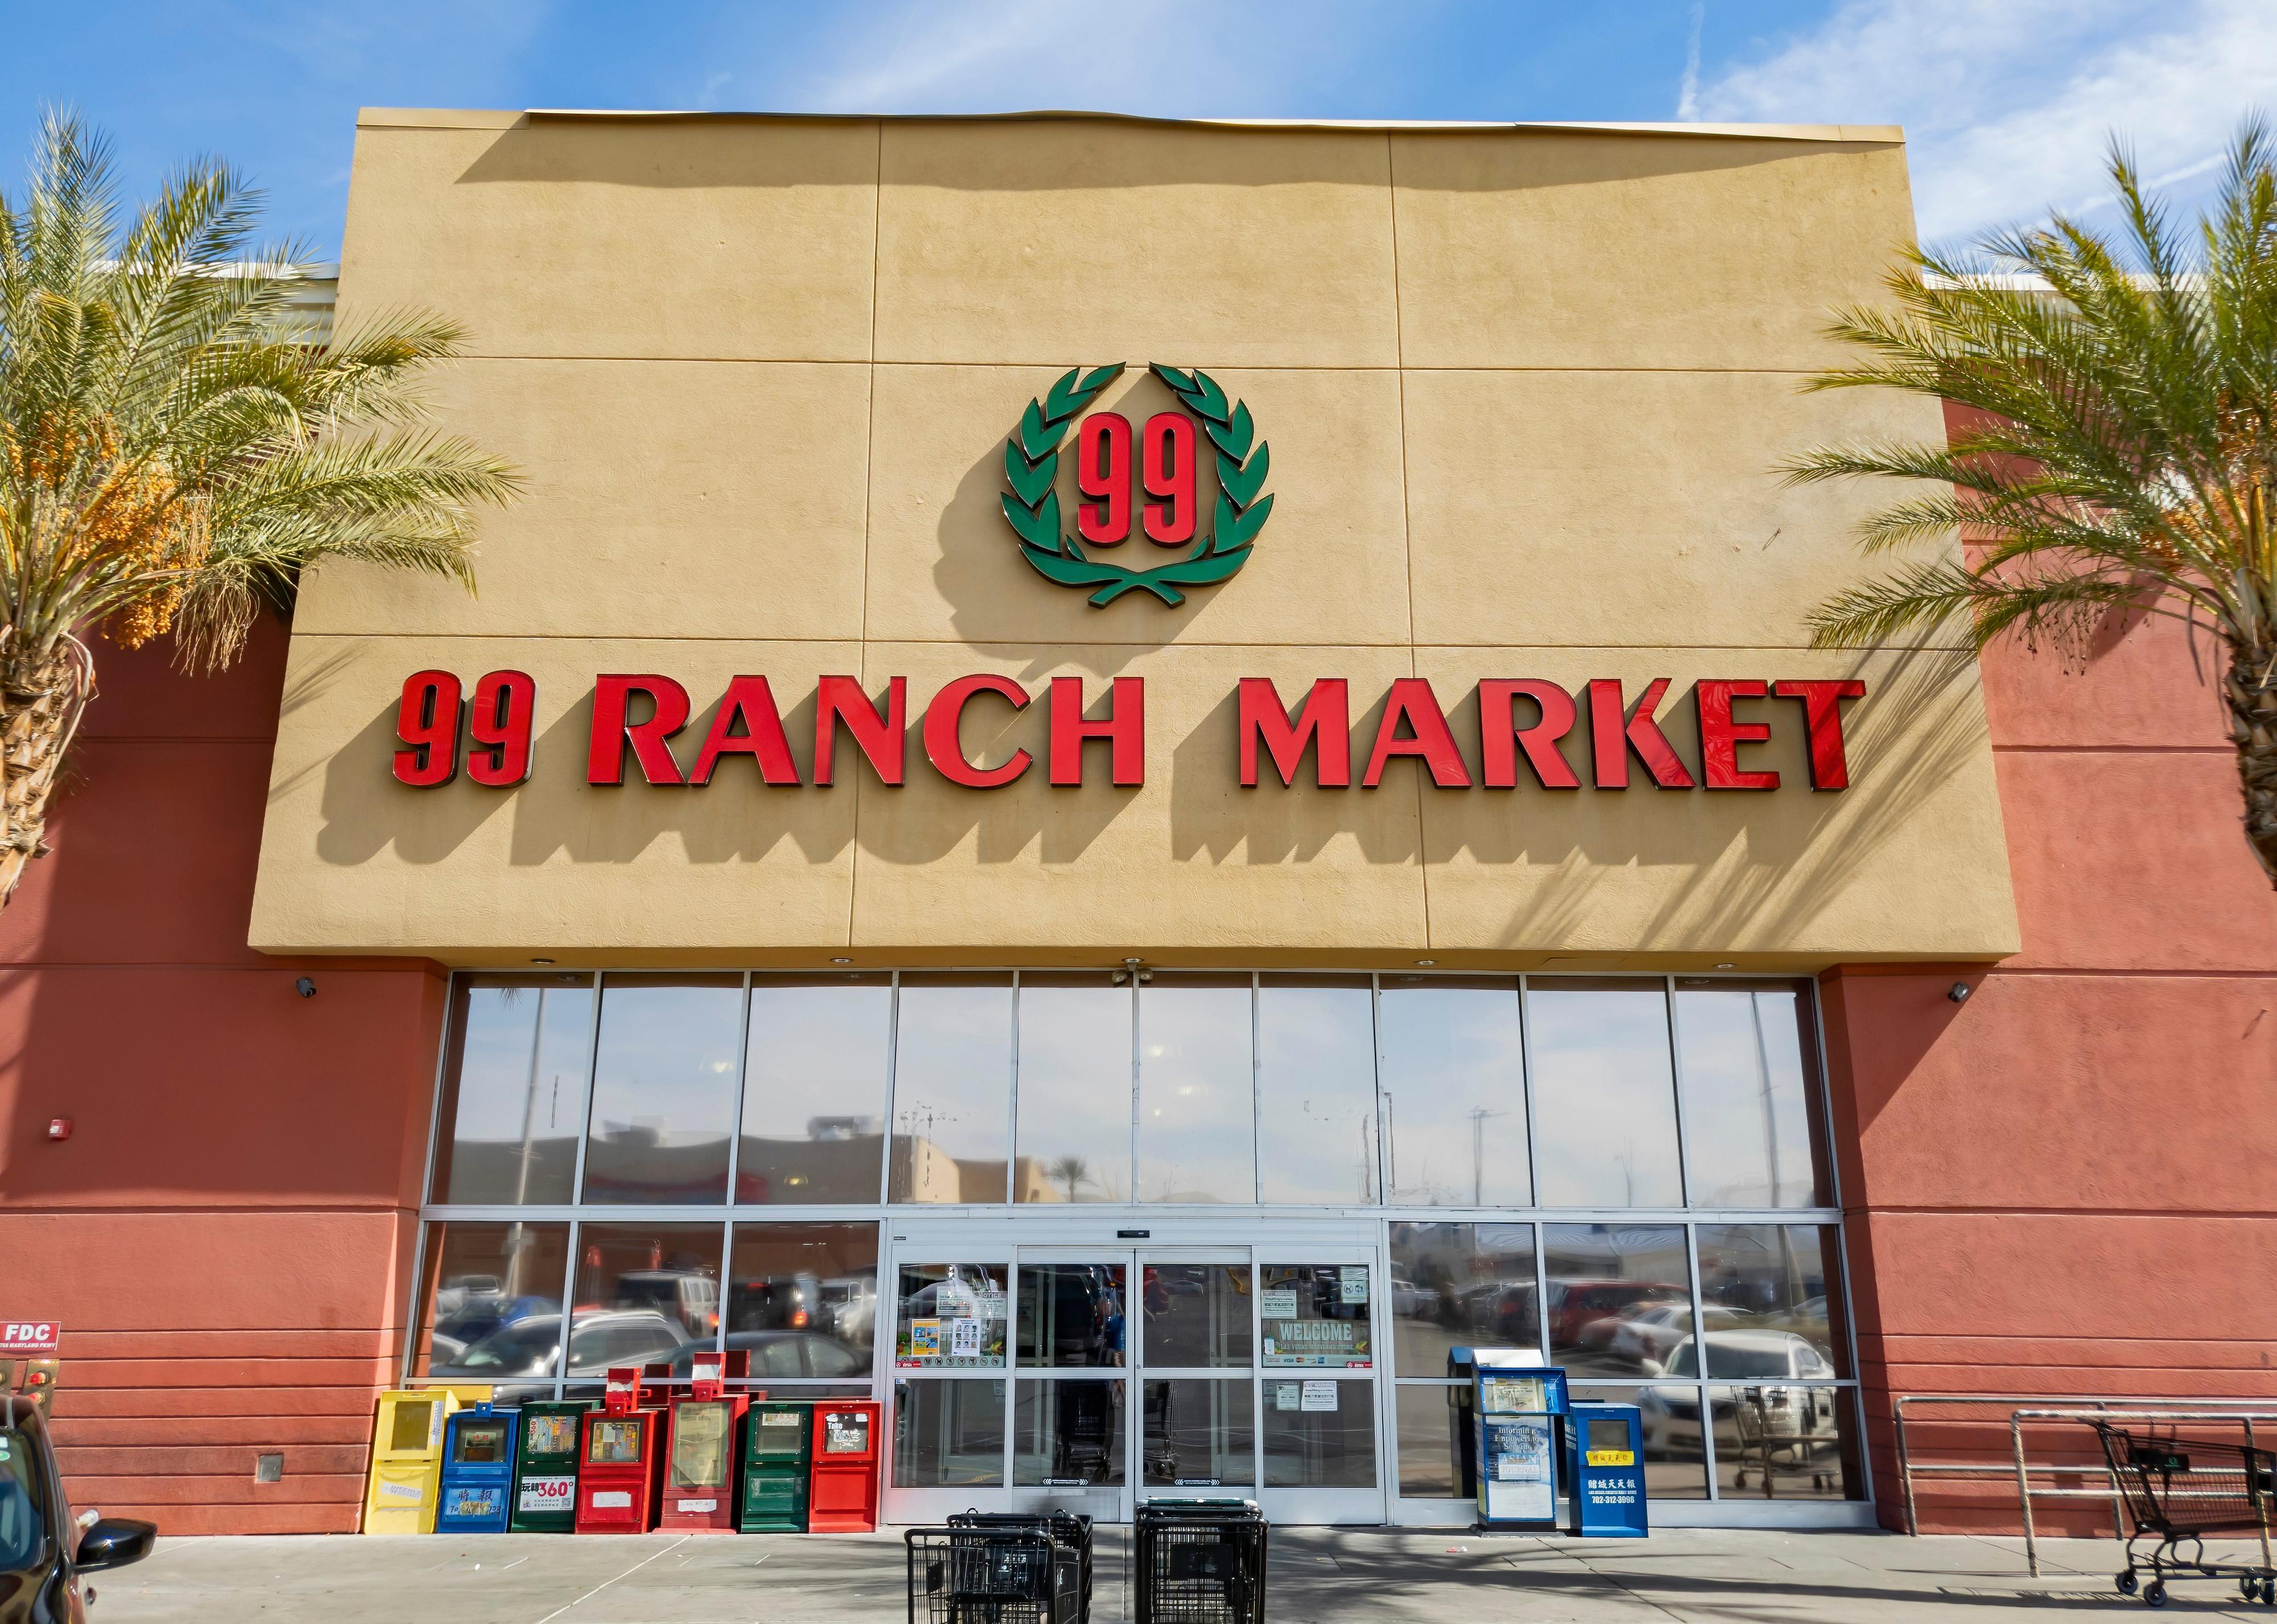 99 Ranch Market storefront.